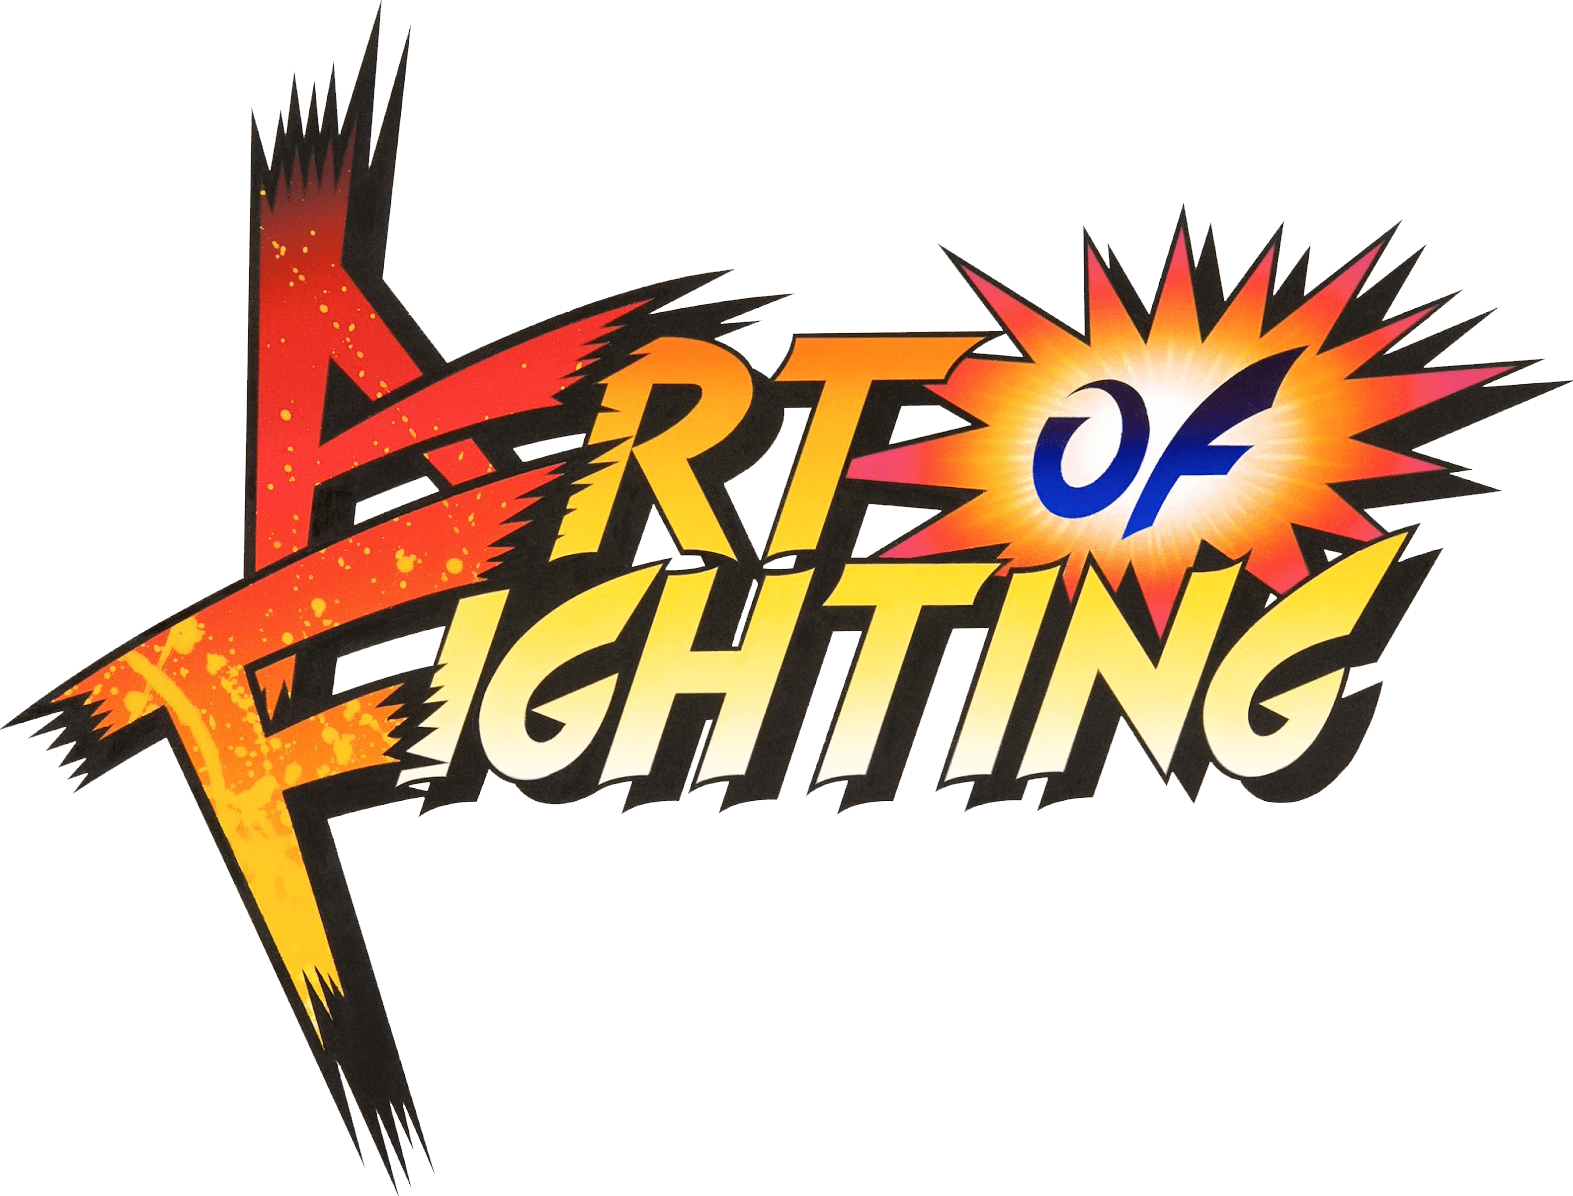 Art of Fighting logo